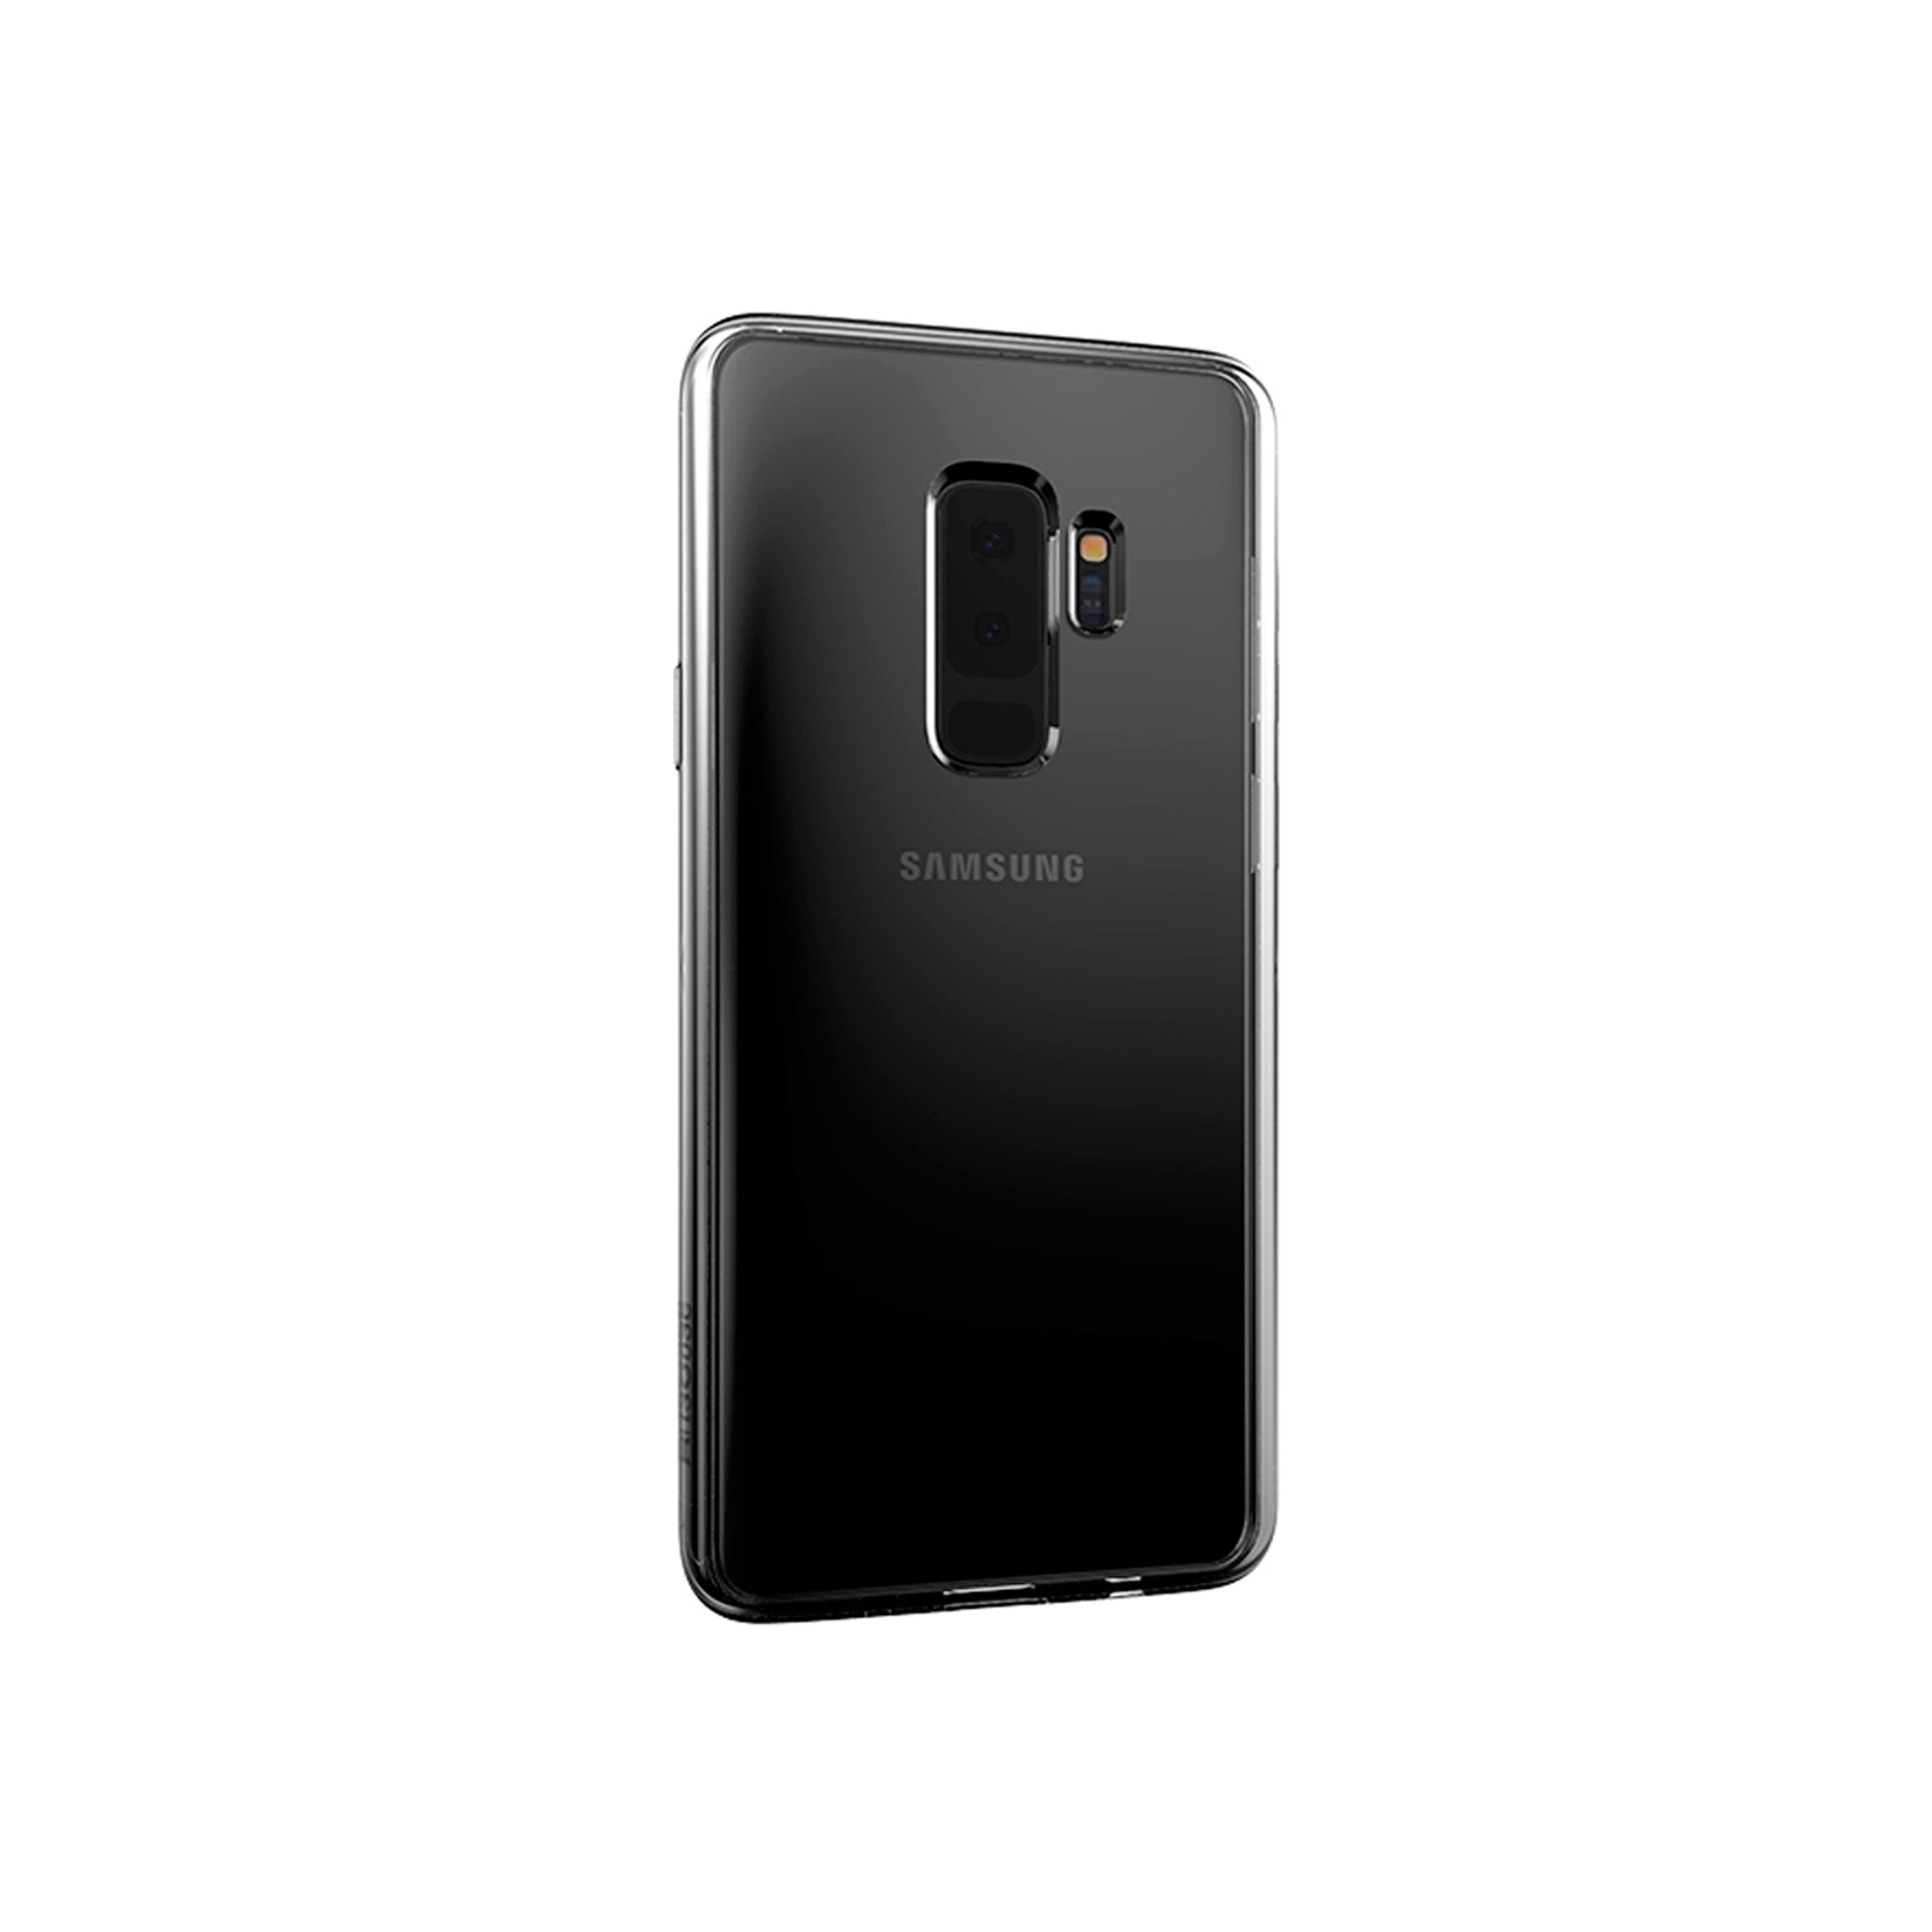 ArtsCase - Impact Hybrid Series for Samsung Galaxy S9+ - Clear / Clear